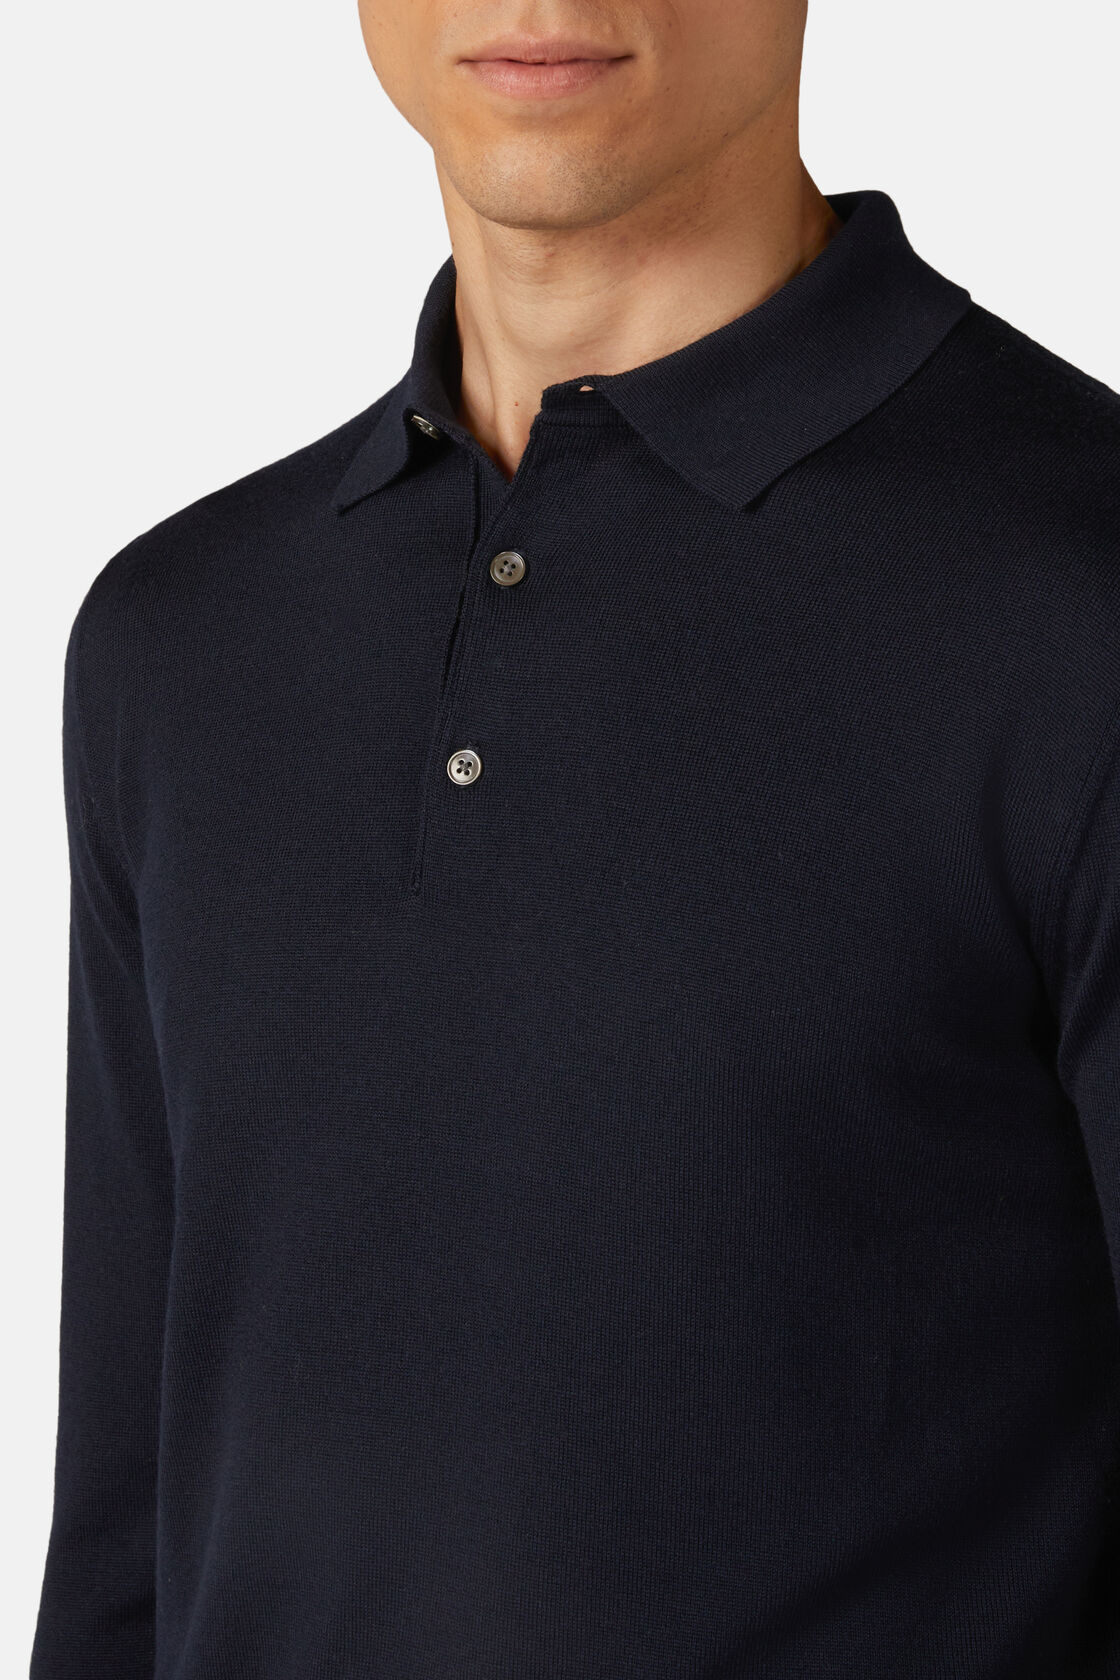 Navy Merino Wool Knitted Polo Shirt, Navy blue, hi-res